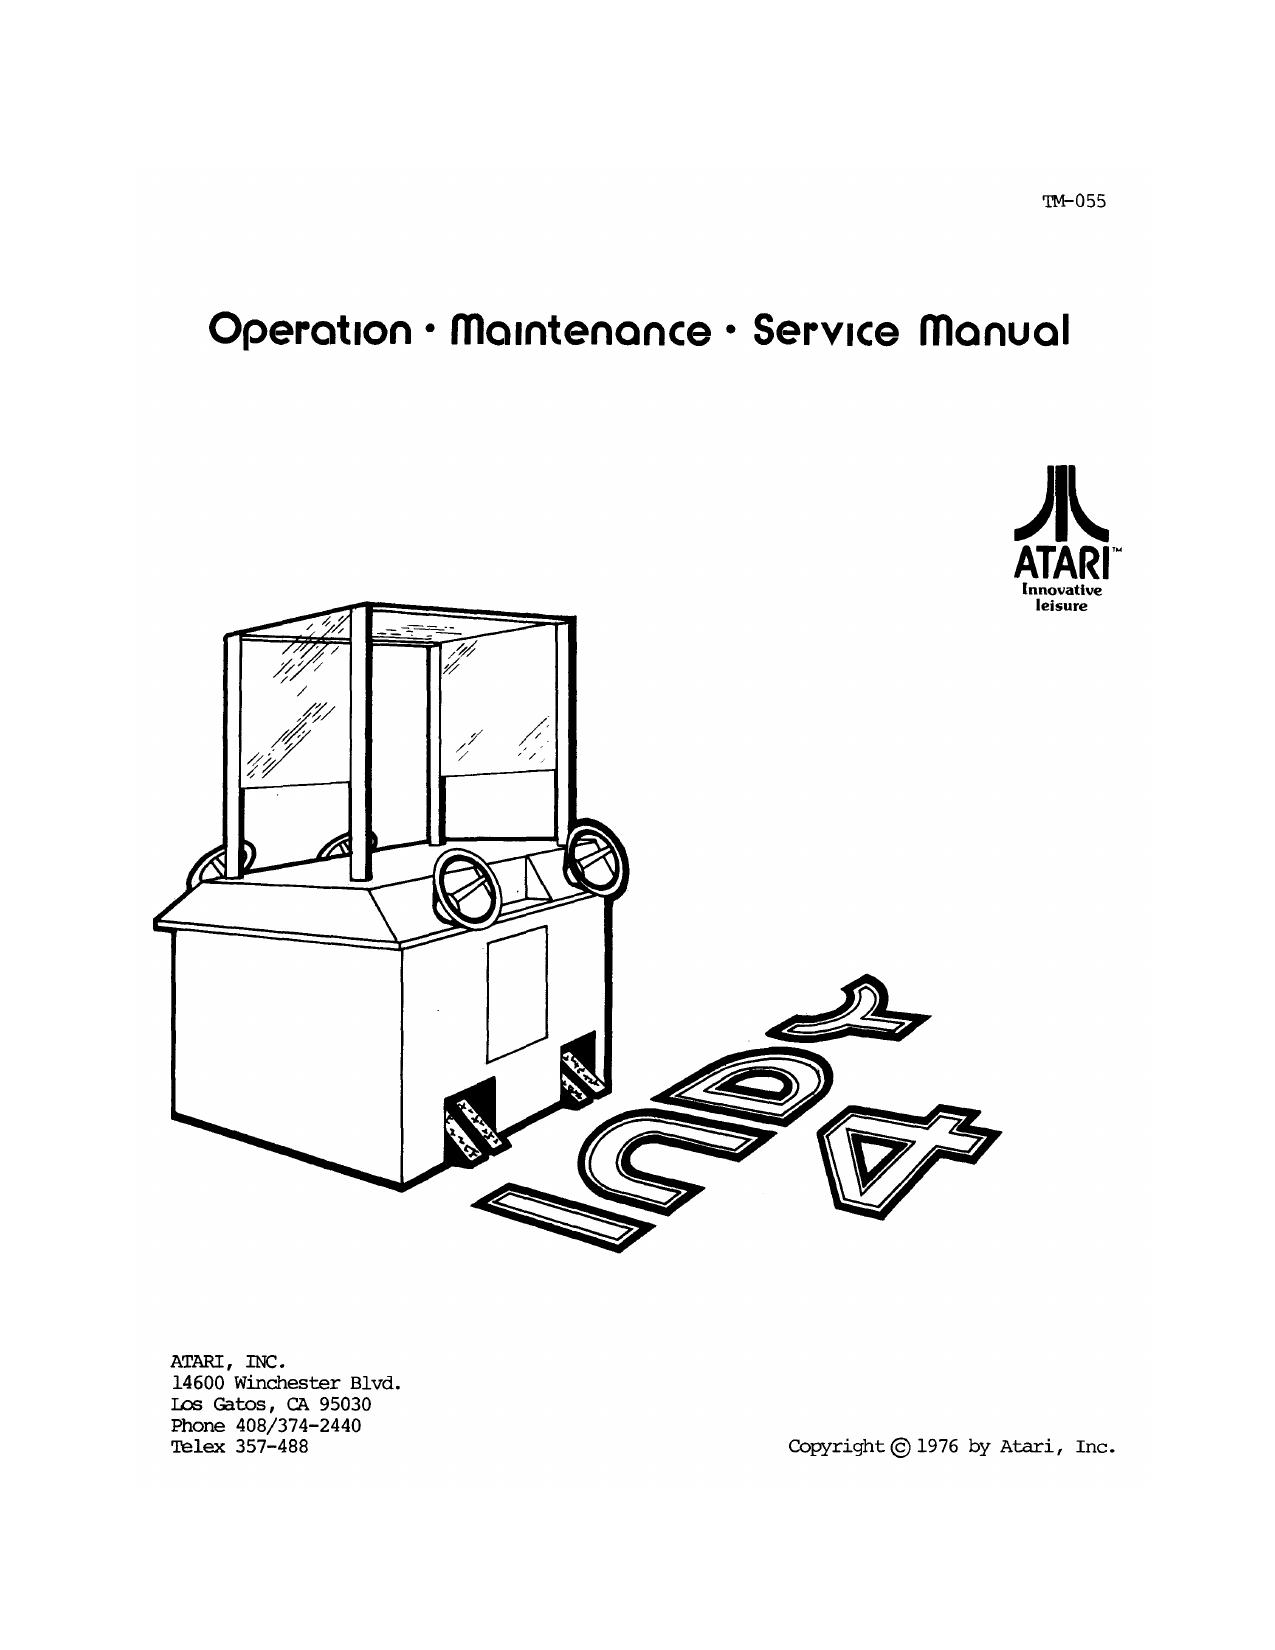 OperationWolf Manual